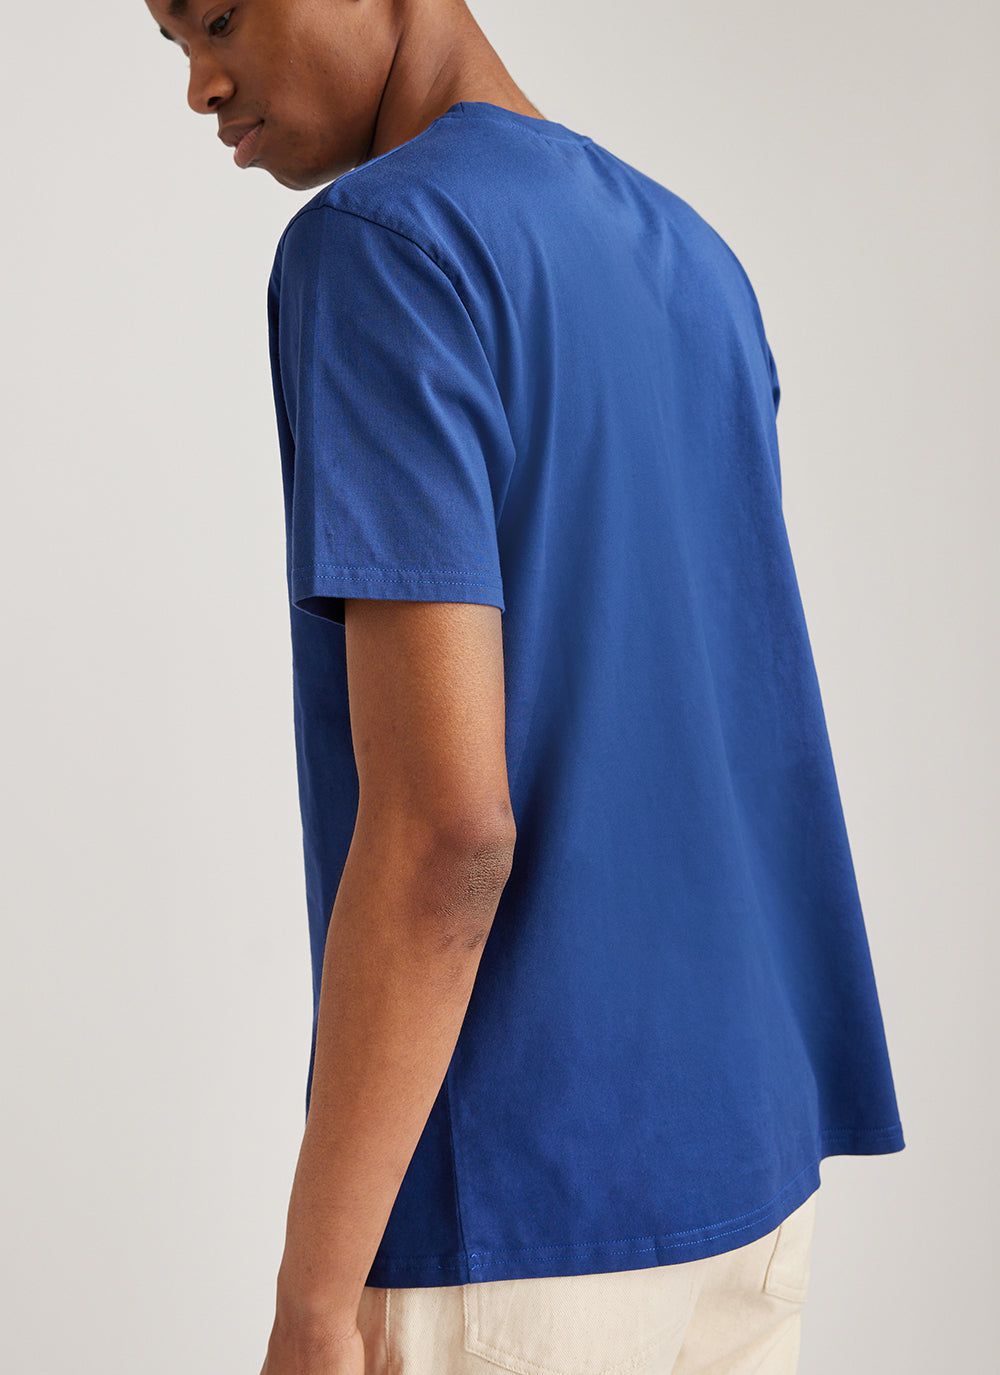 Ramen T Shirt | Embroidered Organic Cotton | Indigo & Percival Menswear